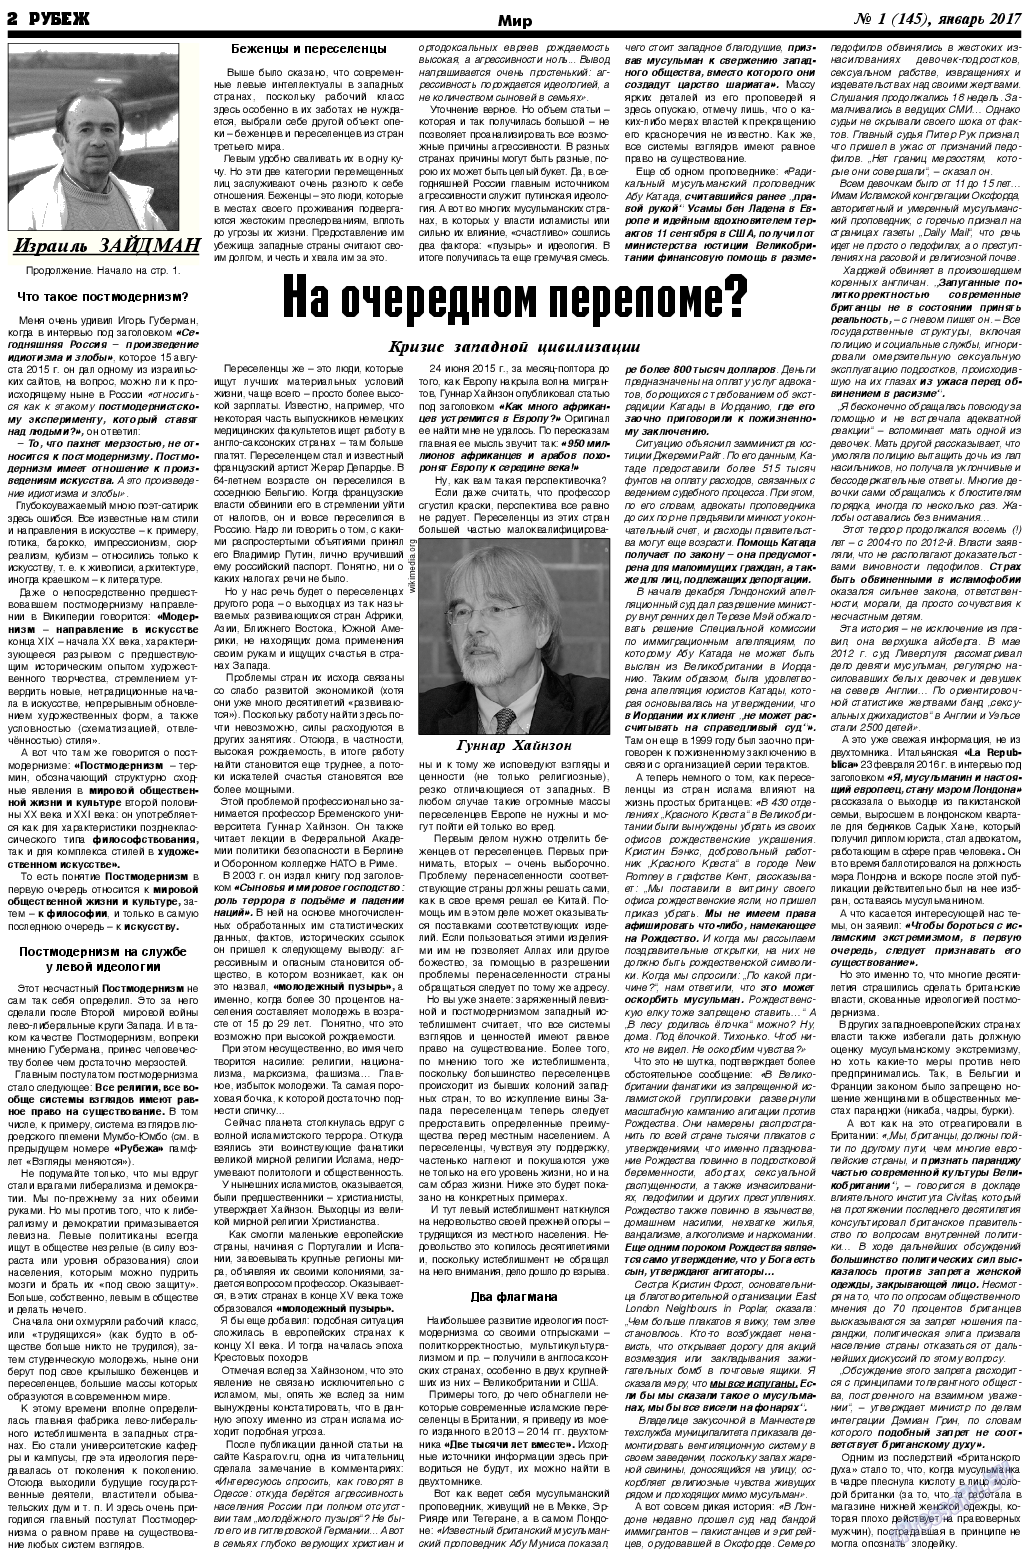 Рубеж, газета. 2017 №1 стр.2